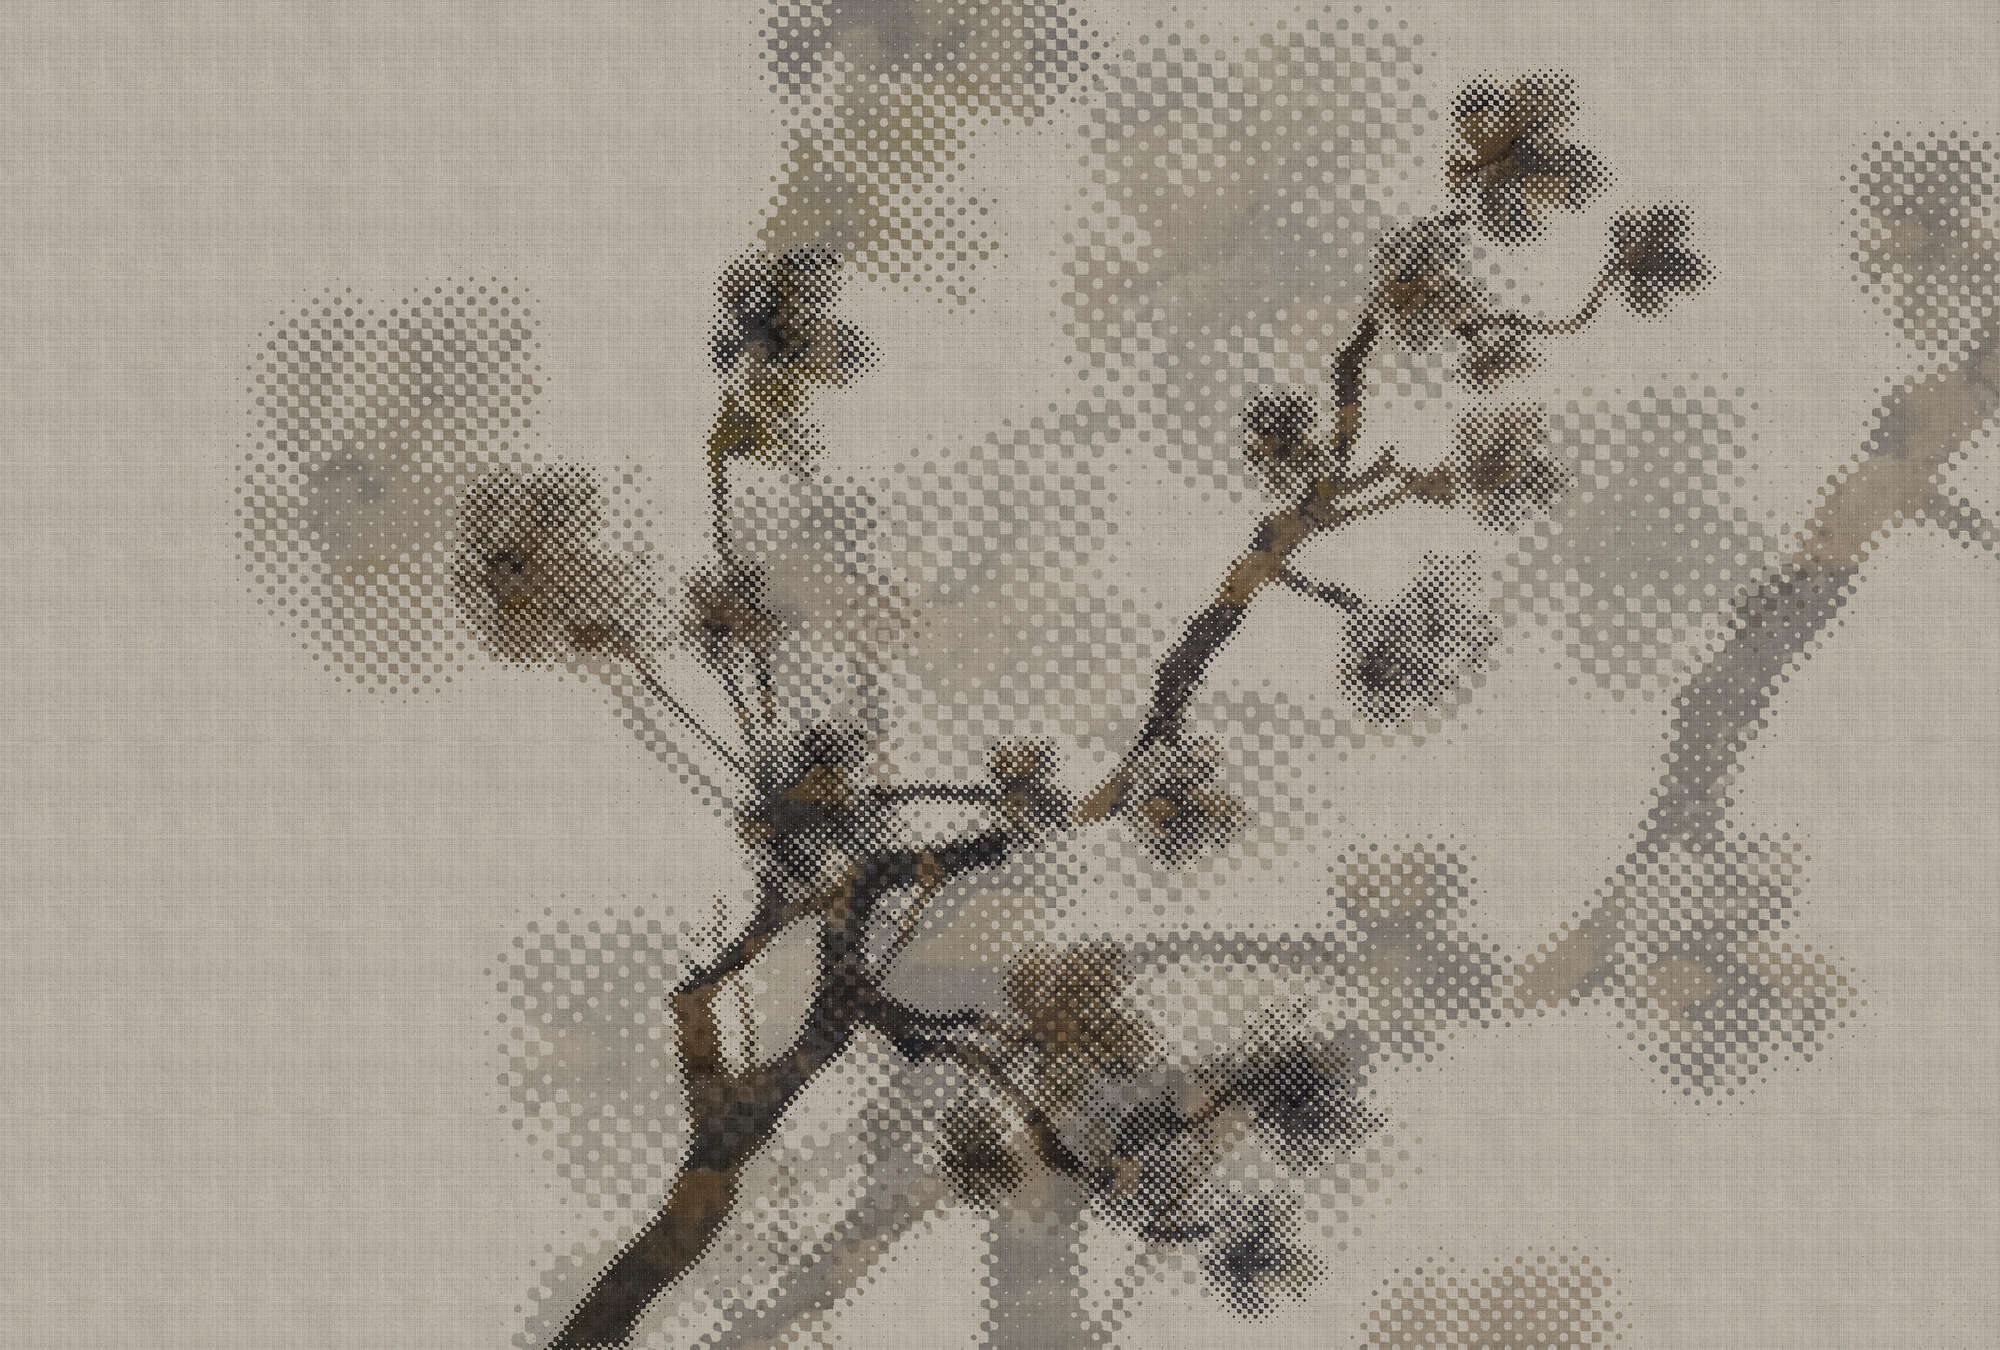             Twigs 1 - Papel pintado fotográfico moderno con motivo natural en estructura de lino natural - Topo | Perla liso no tejido
        